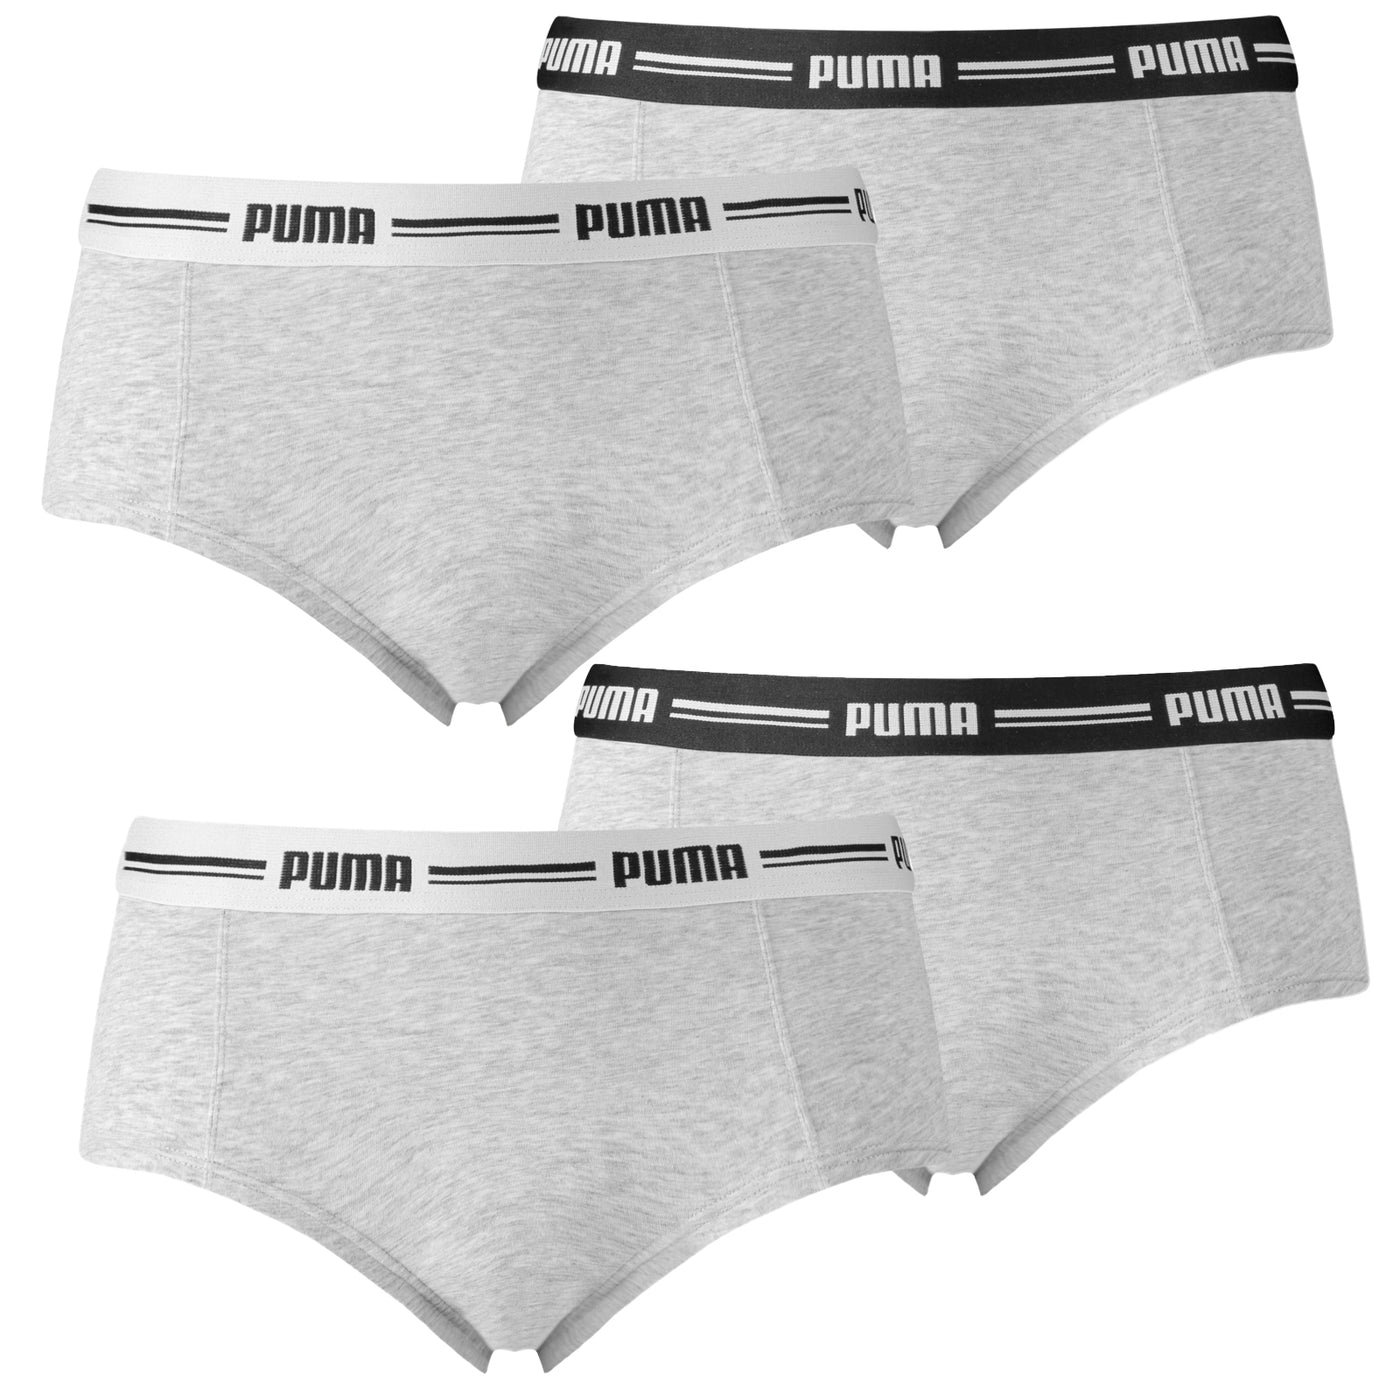 PUMA, Damen Minishorts, 4er Pack, grey / grey